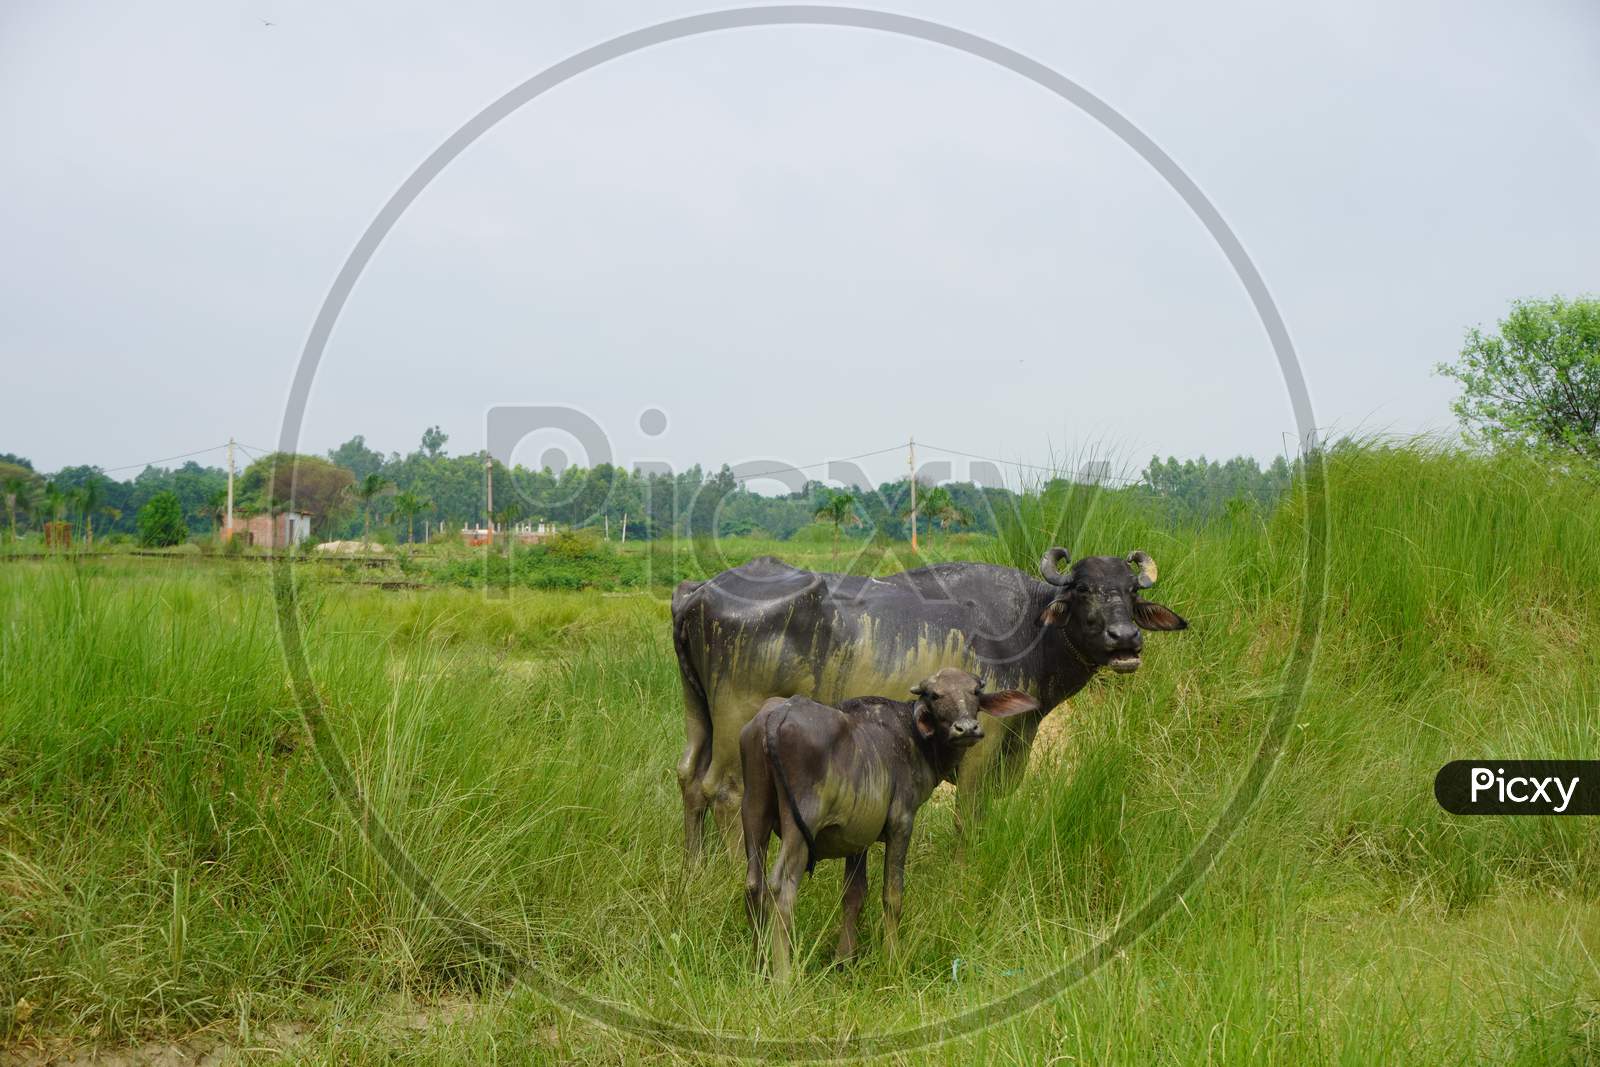 buffalo with baby buffalo photo in the grass field